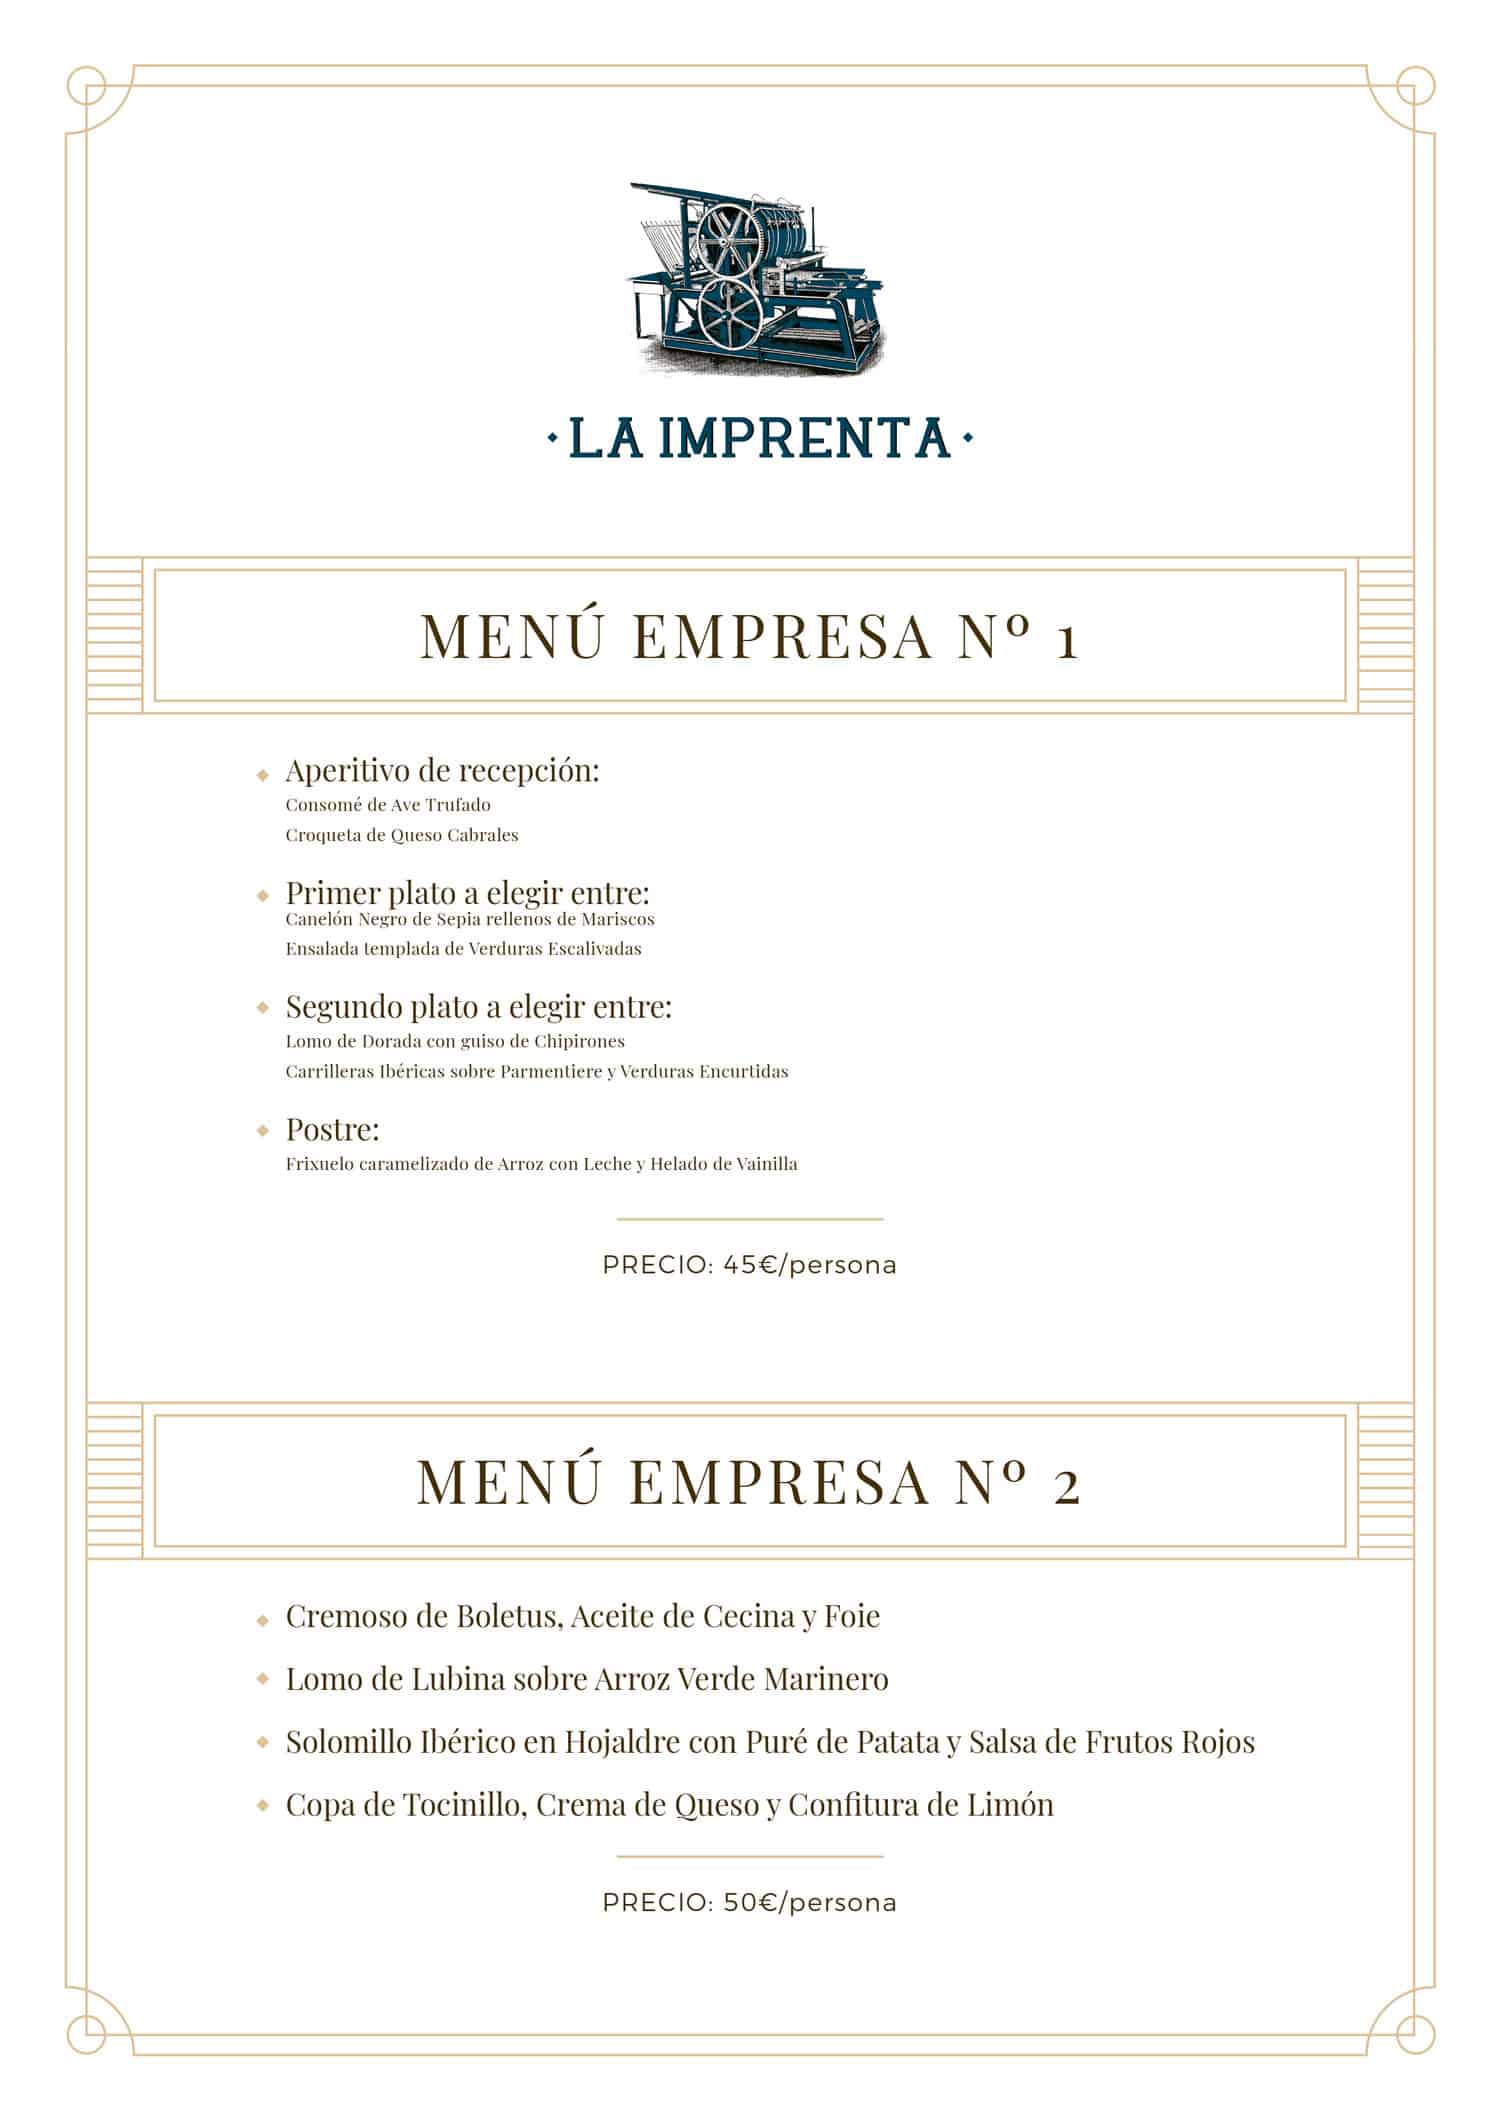 la-imprenta-ibiza-menus-cena-empresa-navidad-2021-welcometoibiza